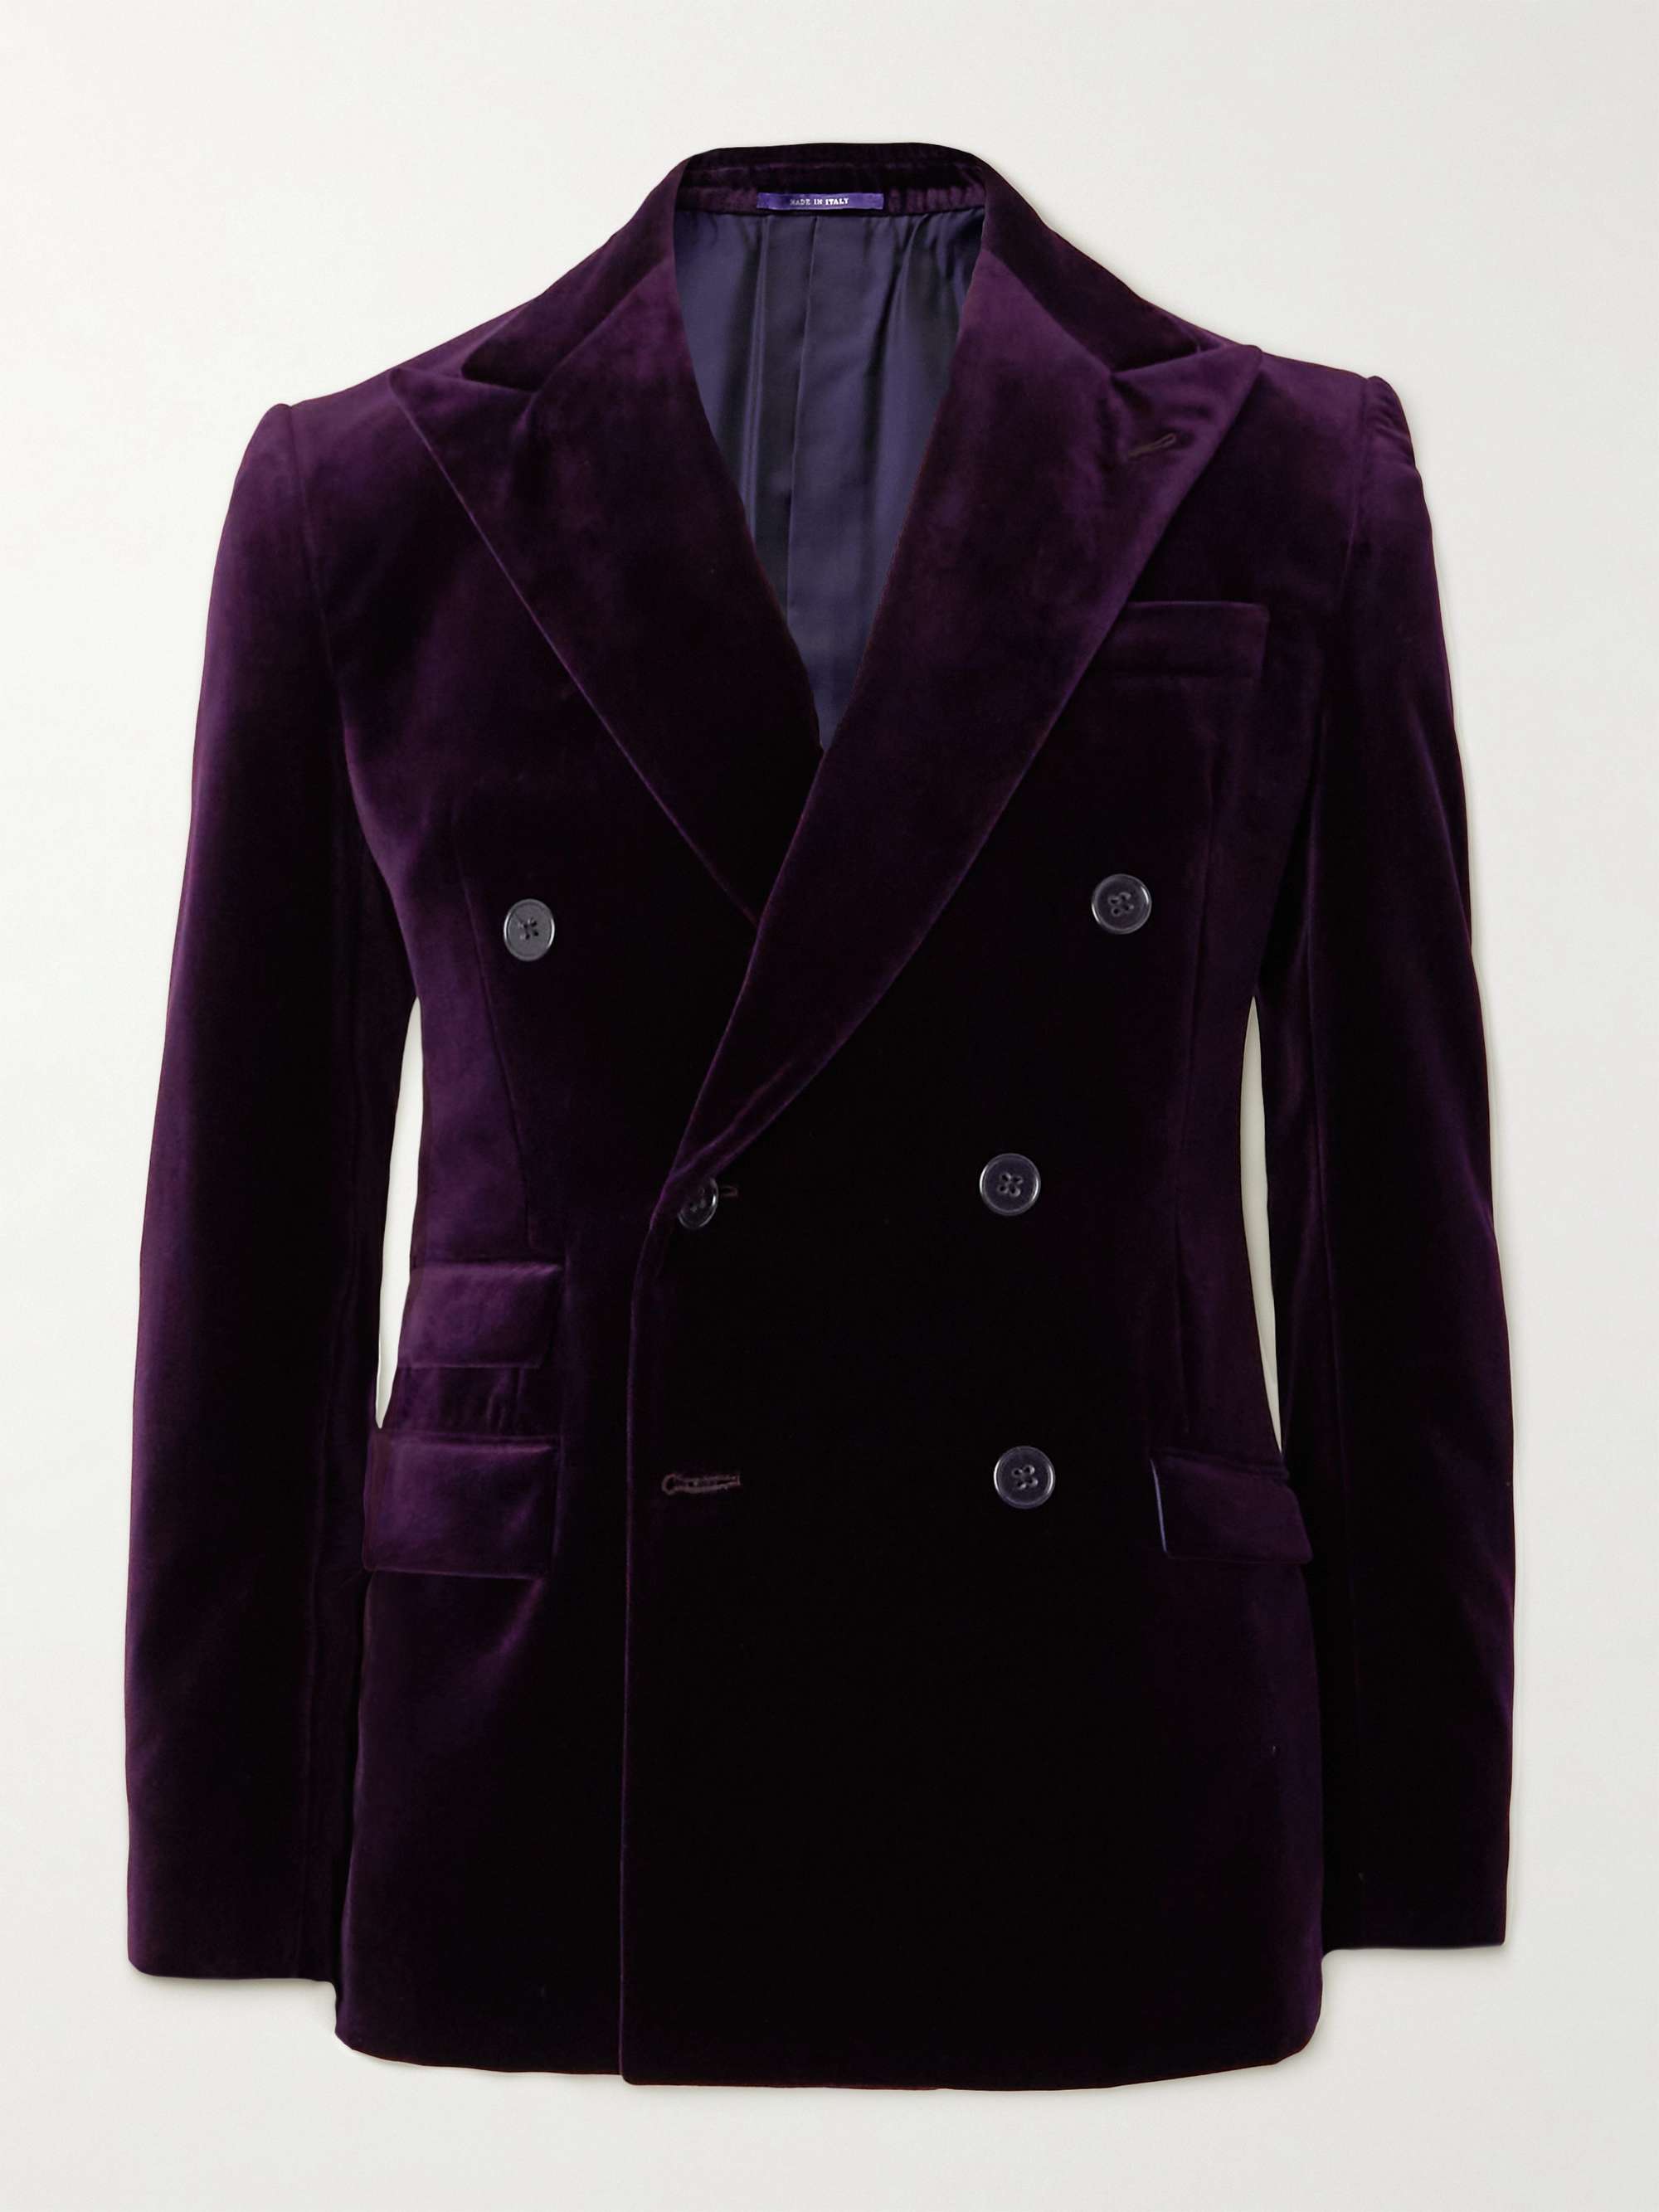 RALPH LAUREN PURPLE LABEL Double-Breasted Cotton-Velvet Tuxedo Jacket